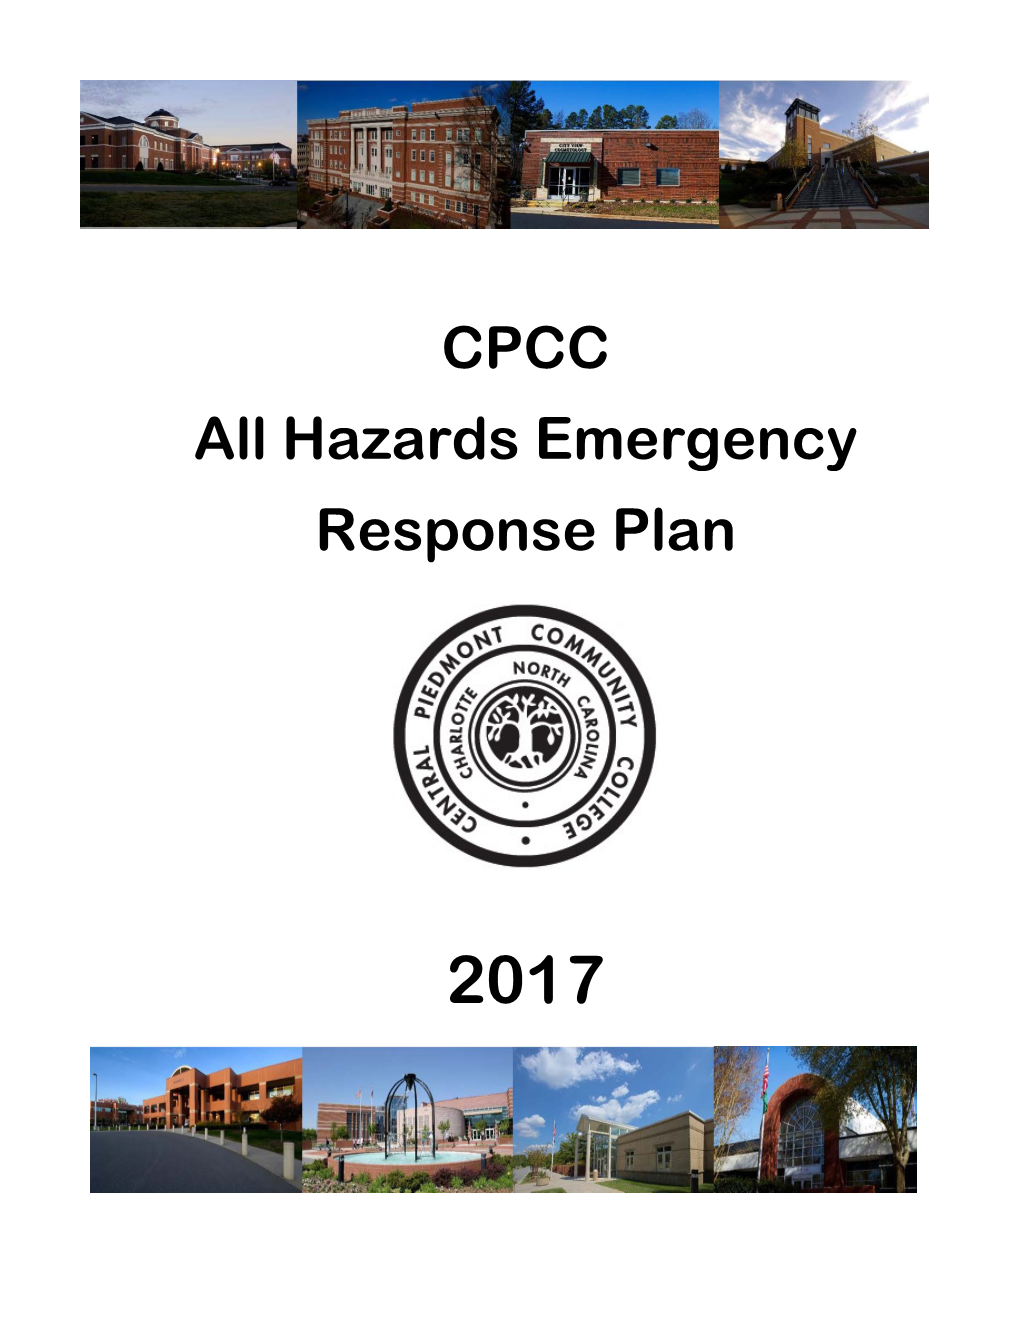 CPCC All Hazards Emergency Response Plan